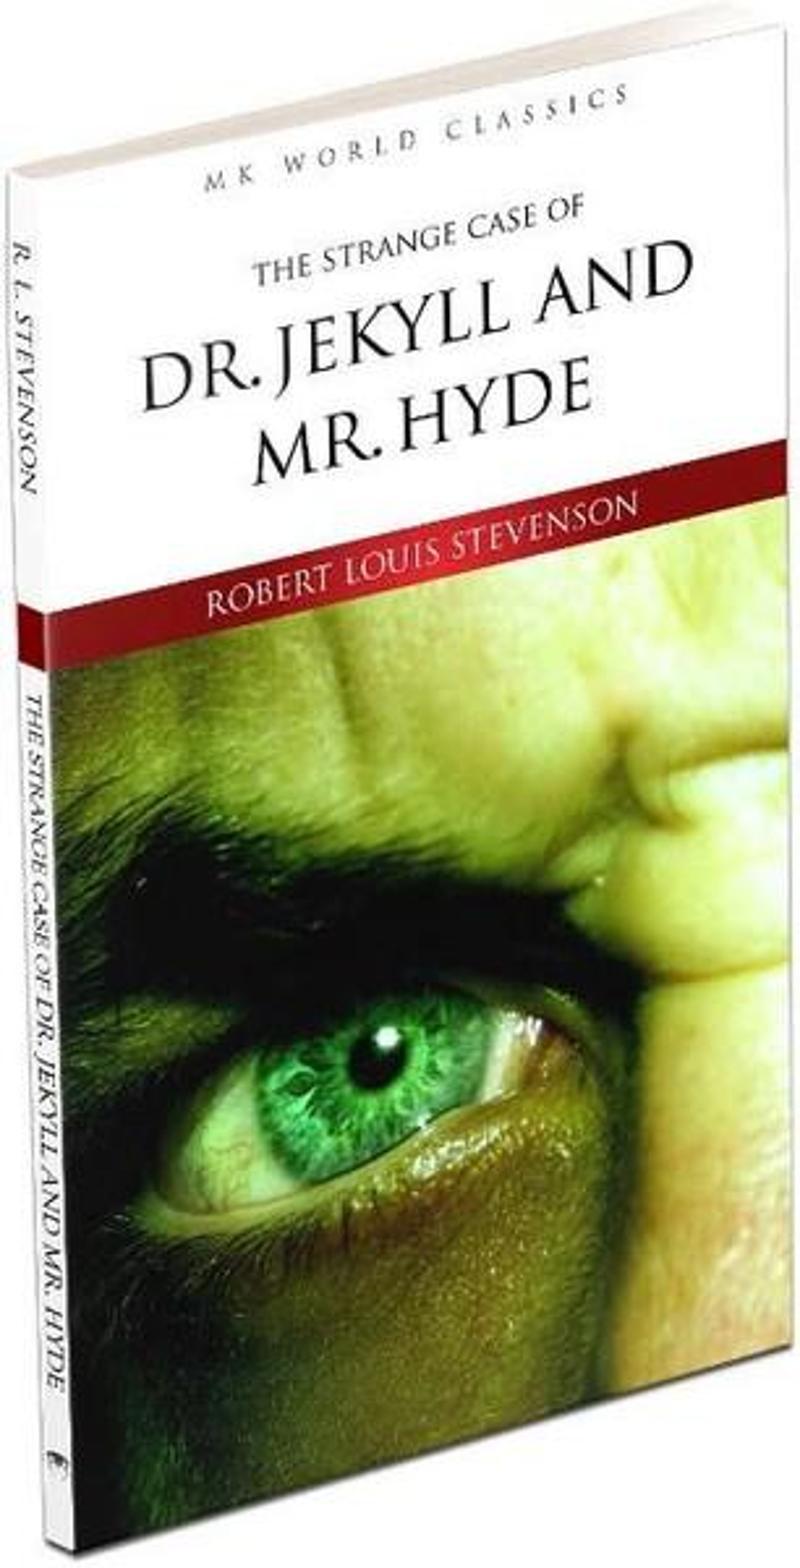 MK Publications The Strange Case Of Dr. Jekyll and Mr. Hyde İngilizce Klasik Roman - Robert Louis Stevenson